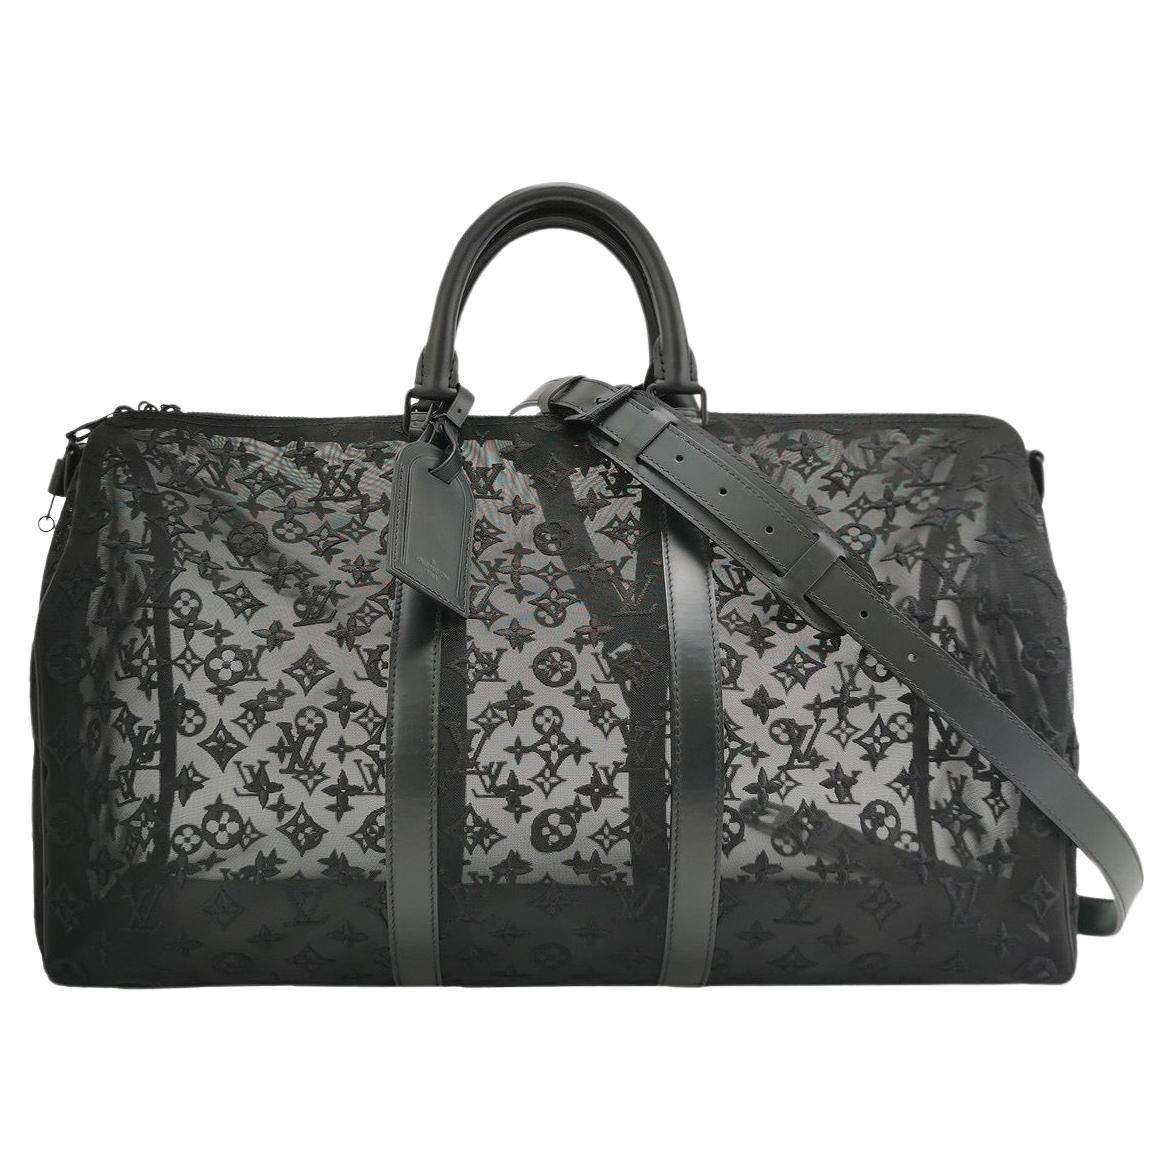 Are Louis Vuitton bags handmade?